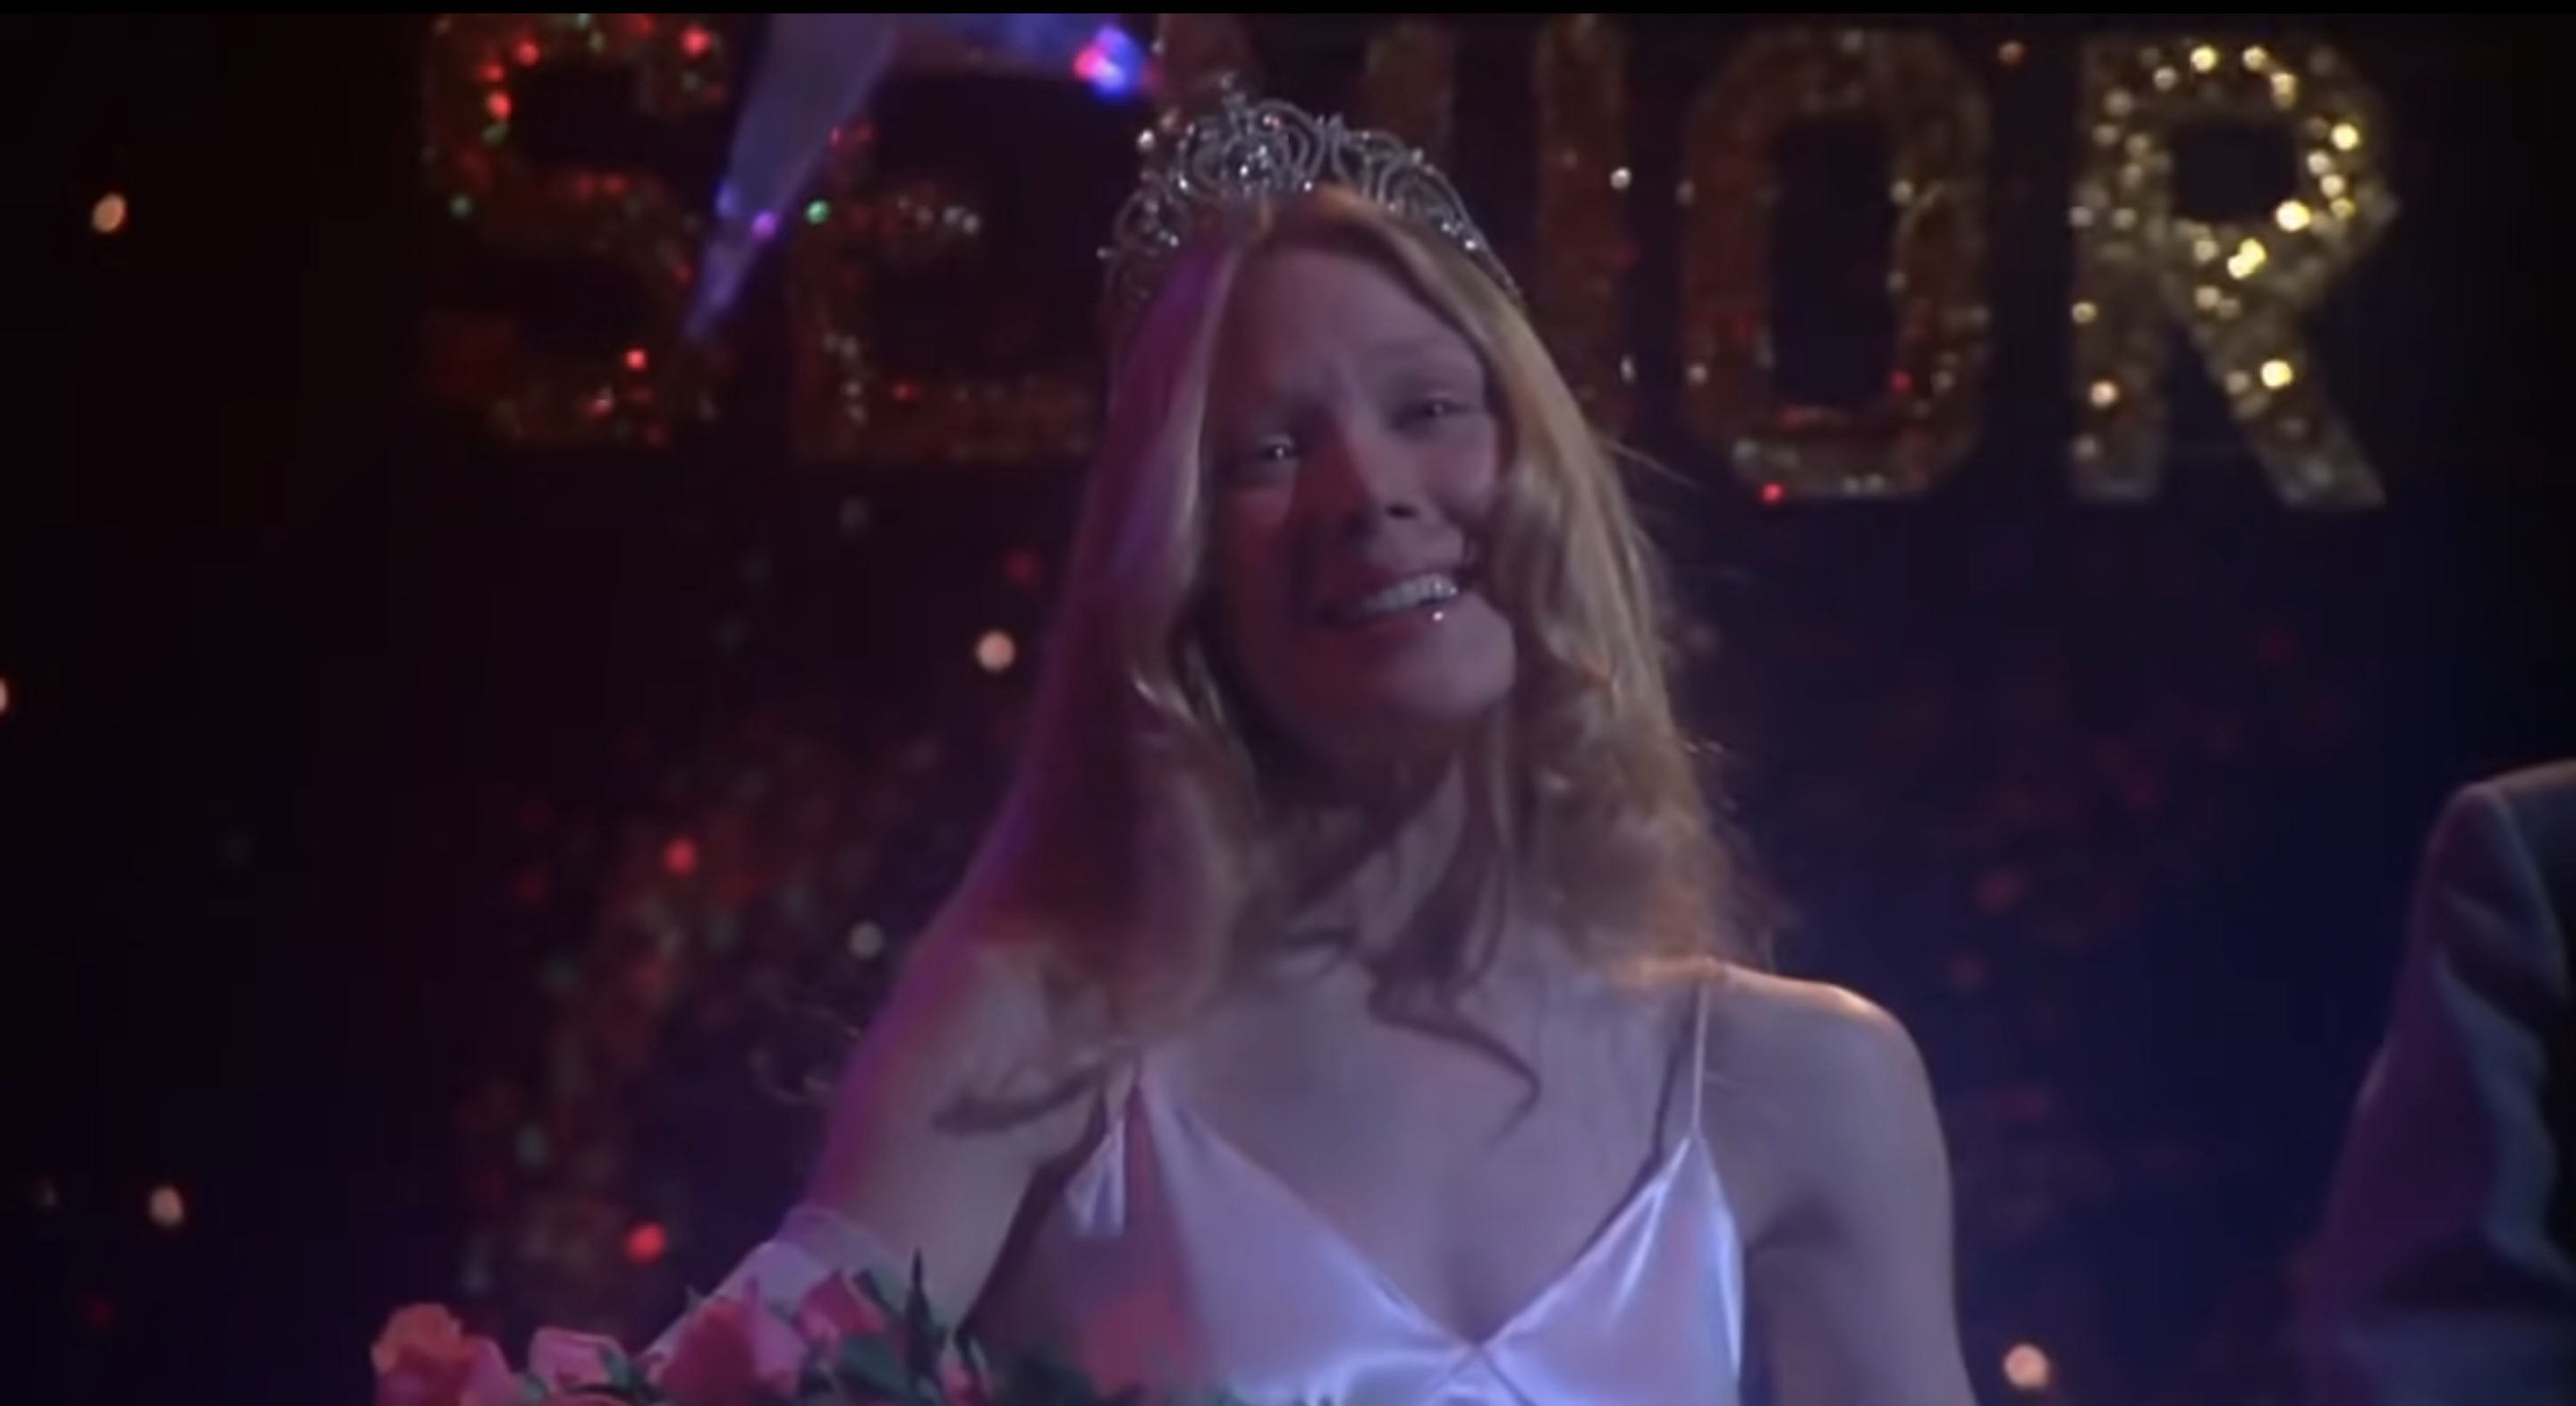 Sissy Spacek as Carrie, the prom queen